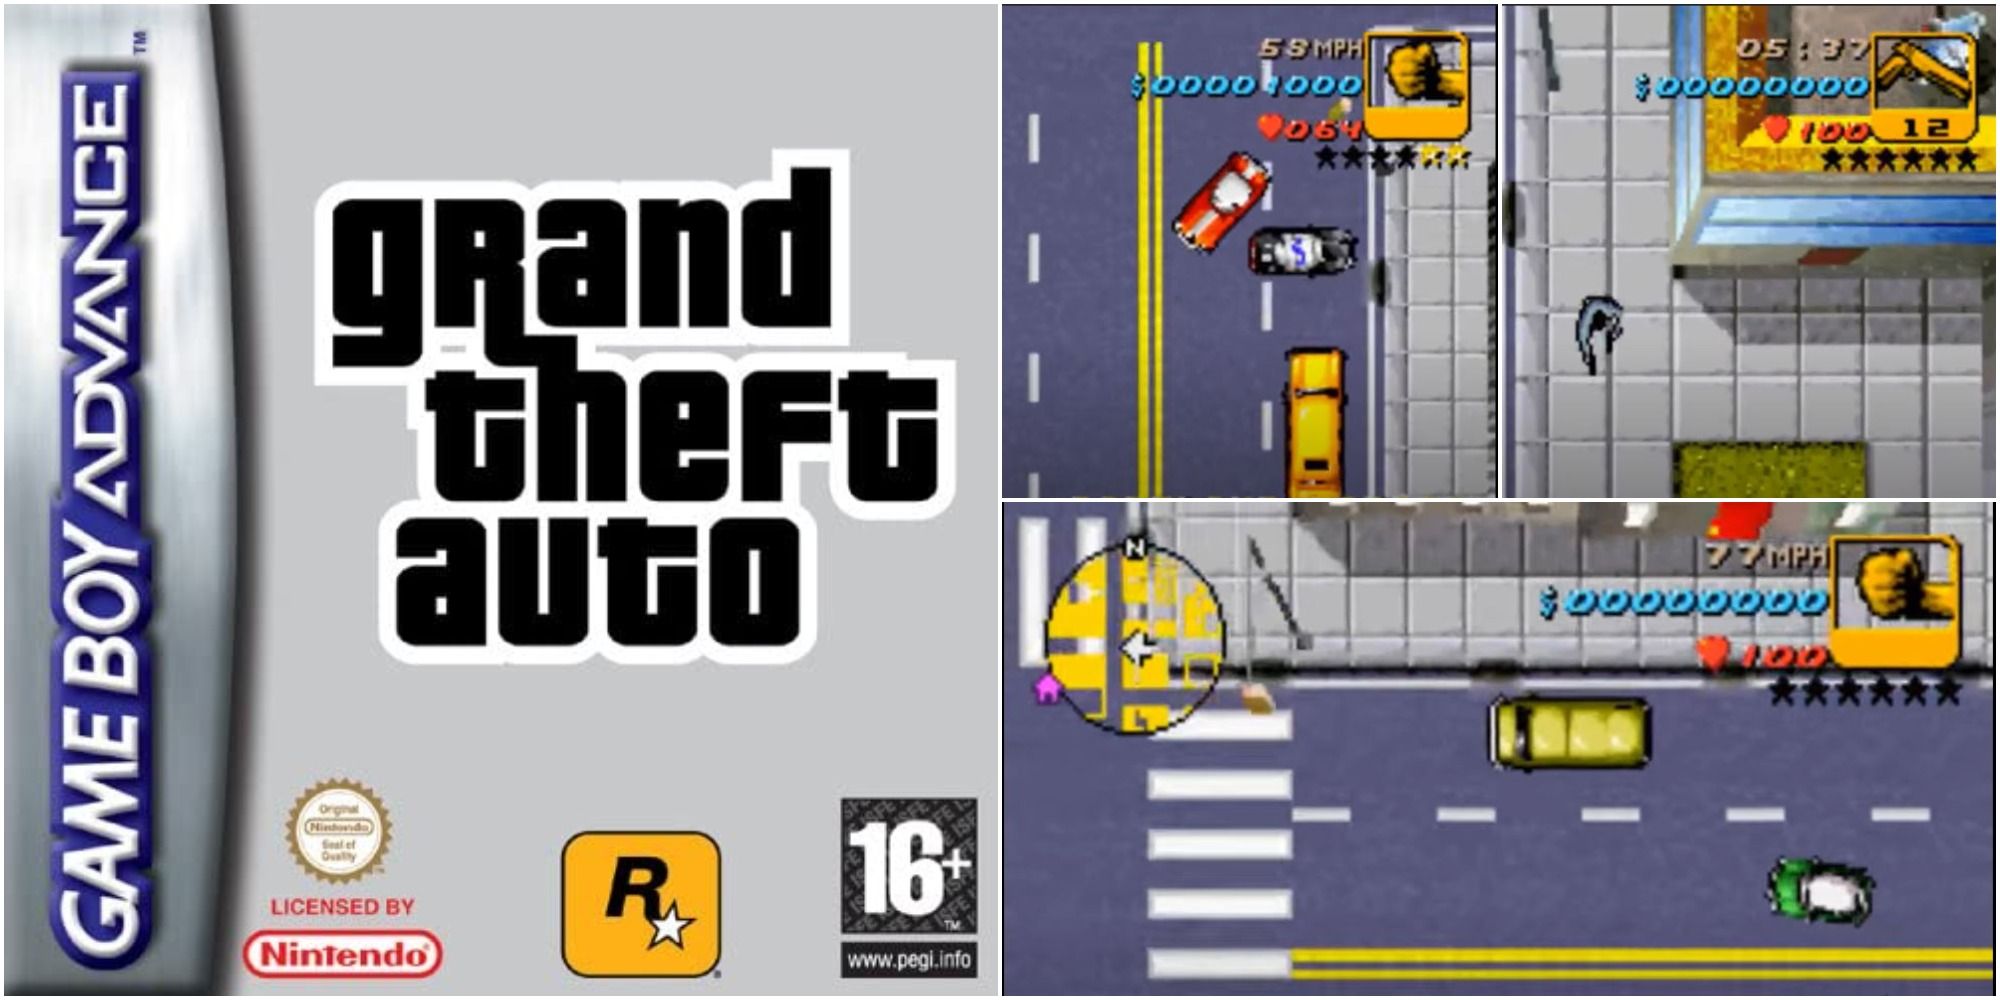 Grand Theft Auto Advance Game Boy Advance